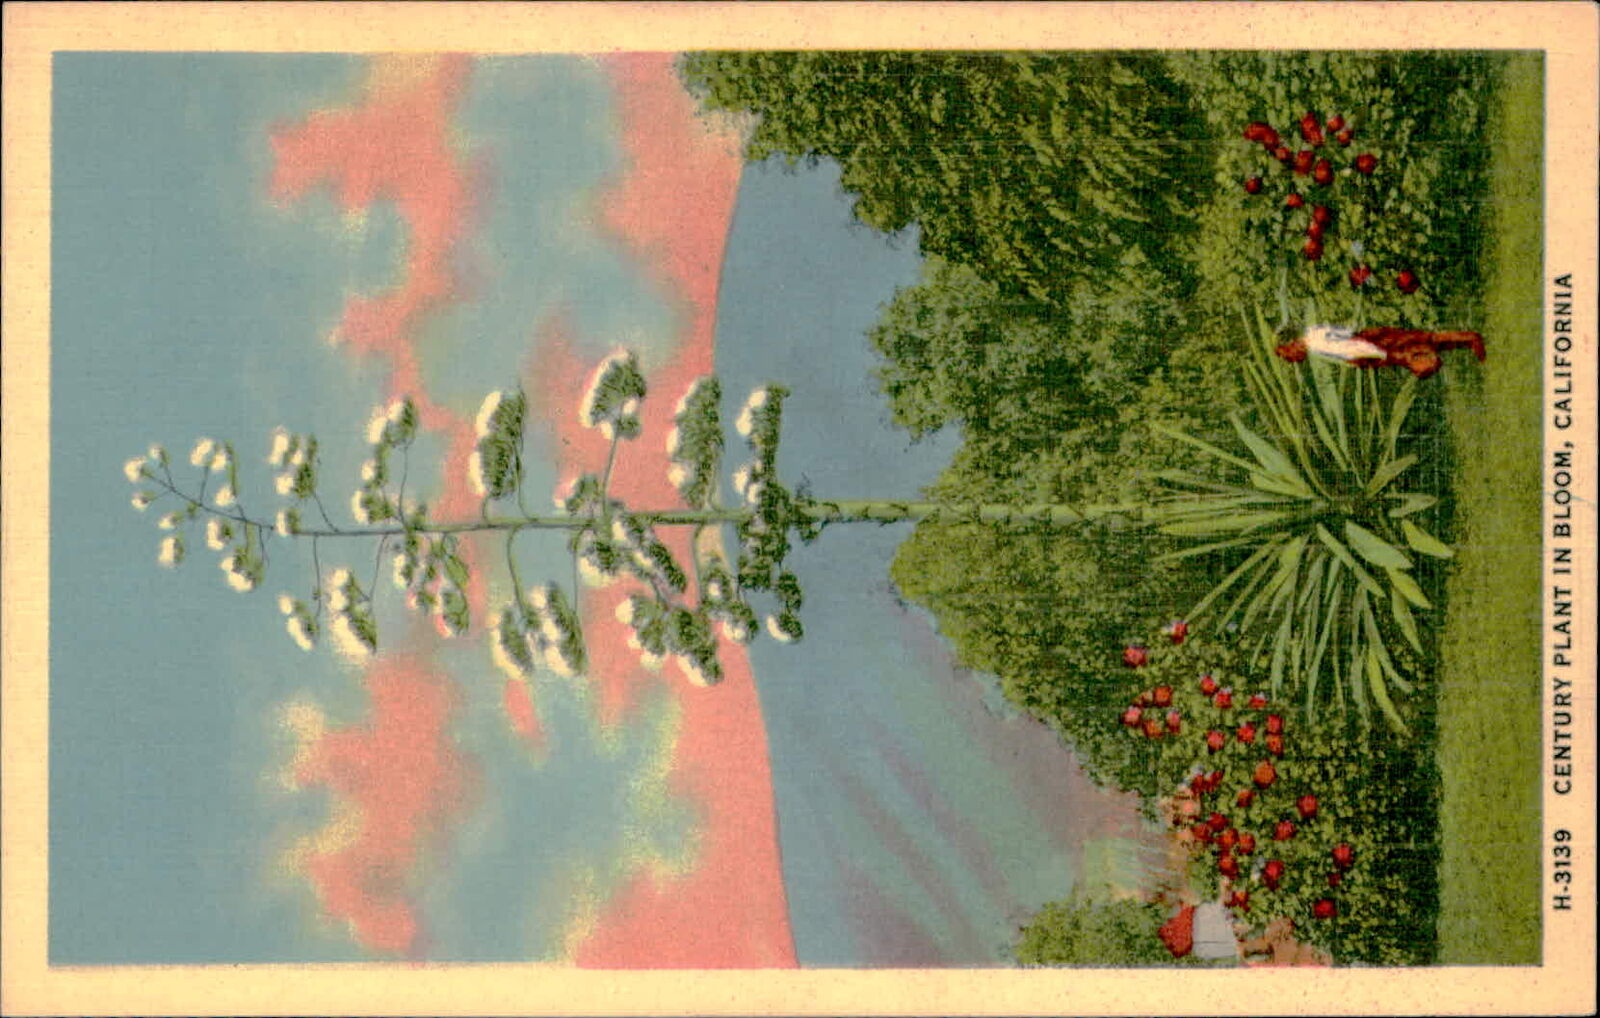 Postcard: H-3139 CENTURY PLANT IN BLOOM, CALIFORNIA